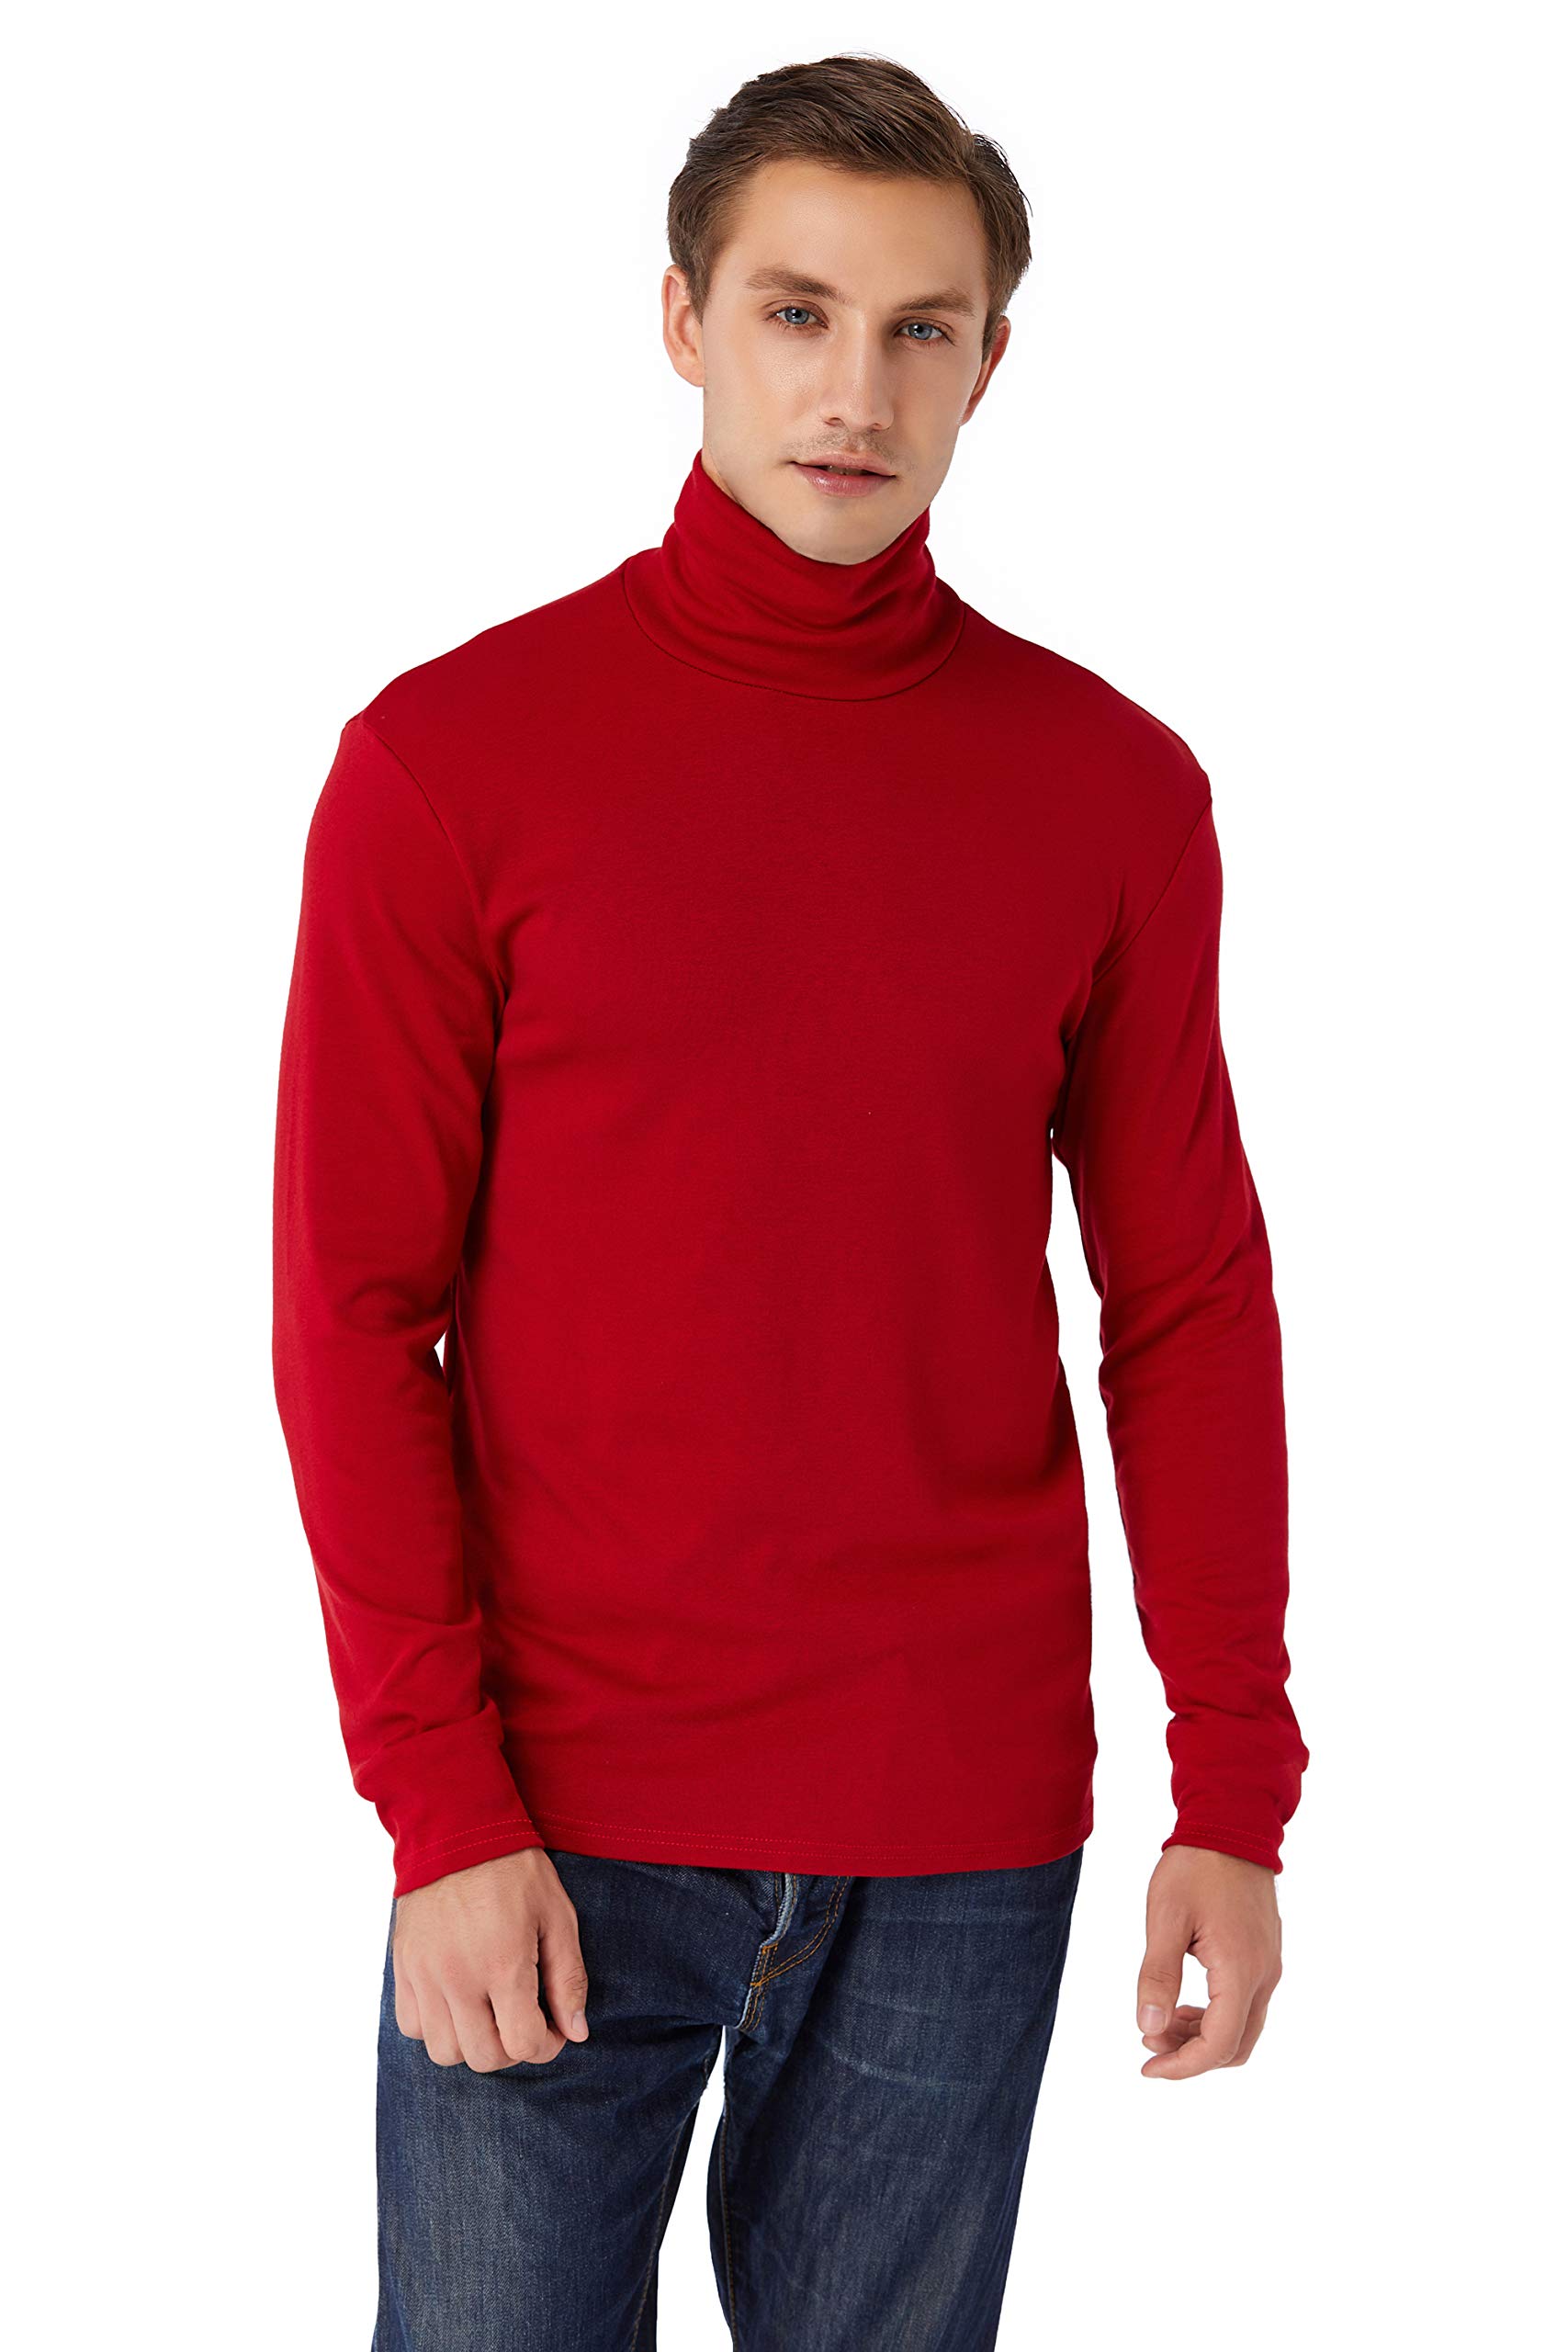 Derminpro Men's Turtleneck Soft Long Sleeve Slim Fit T-Shirt Red X-Large